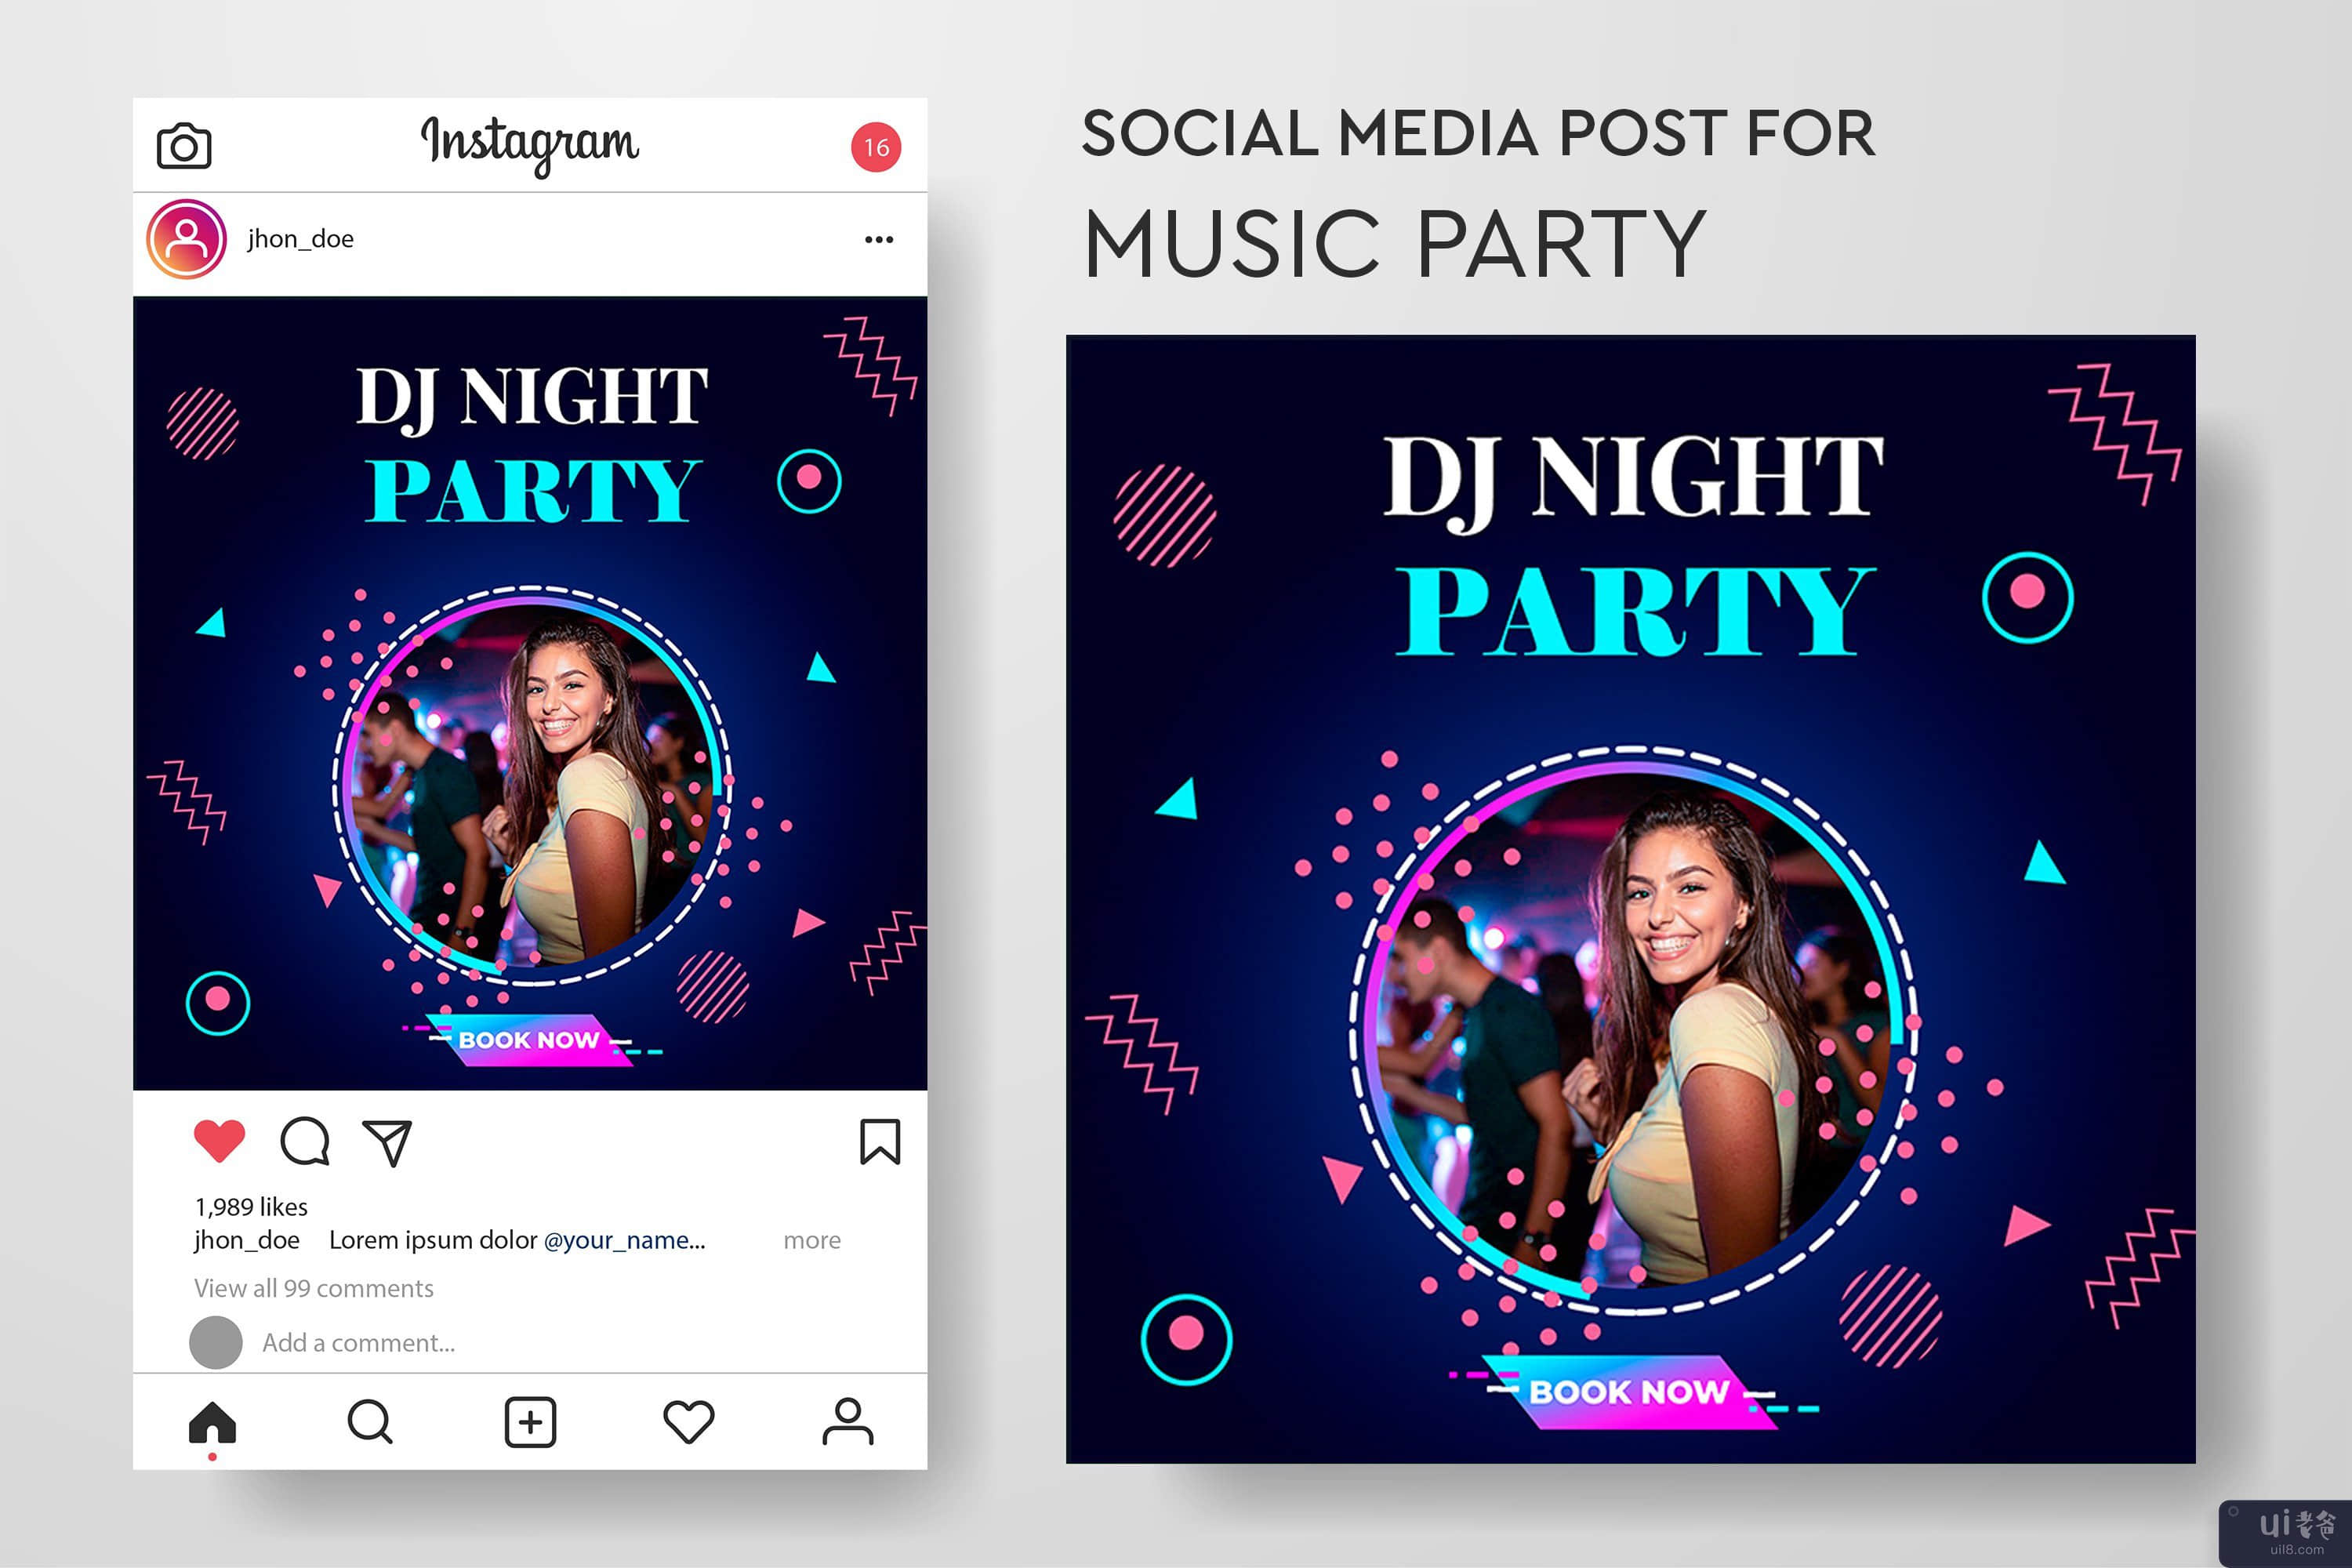 音乐派对社交媒体帖子合集(Music party social media post collection)插图2